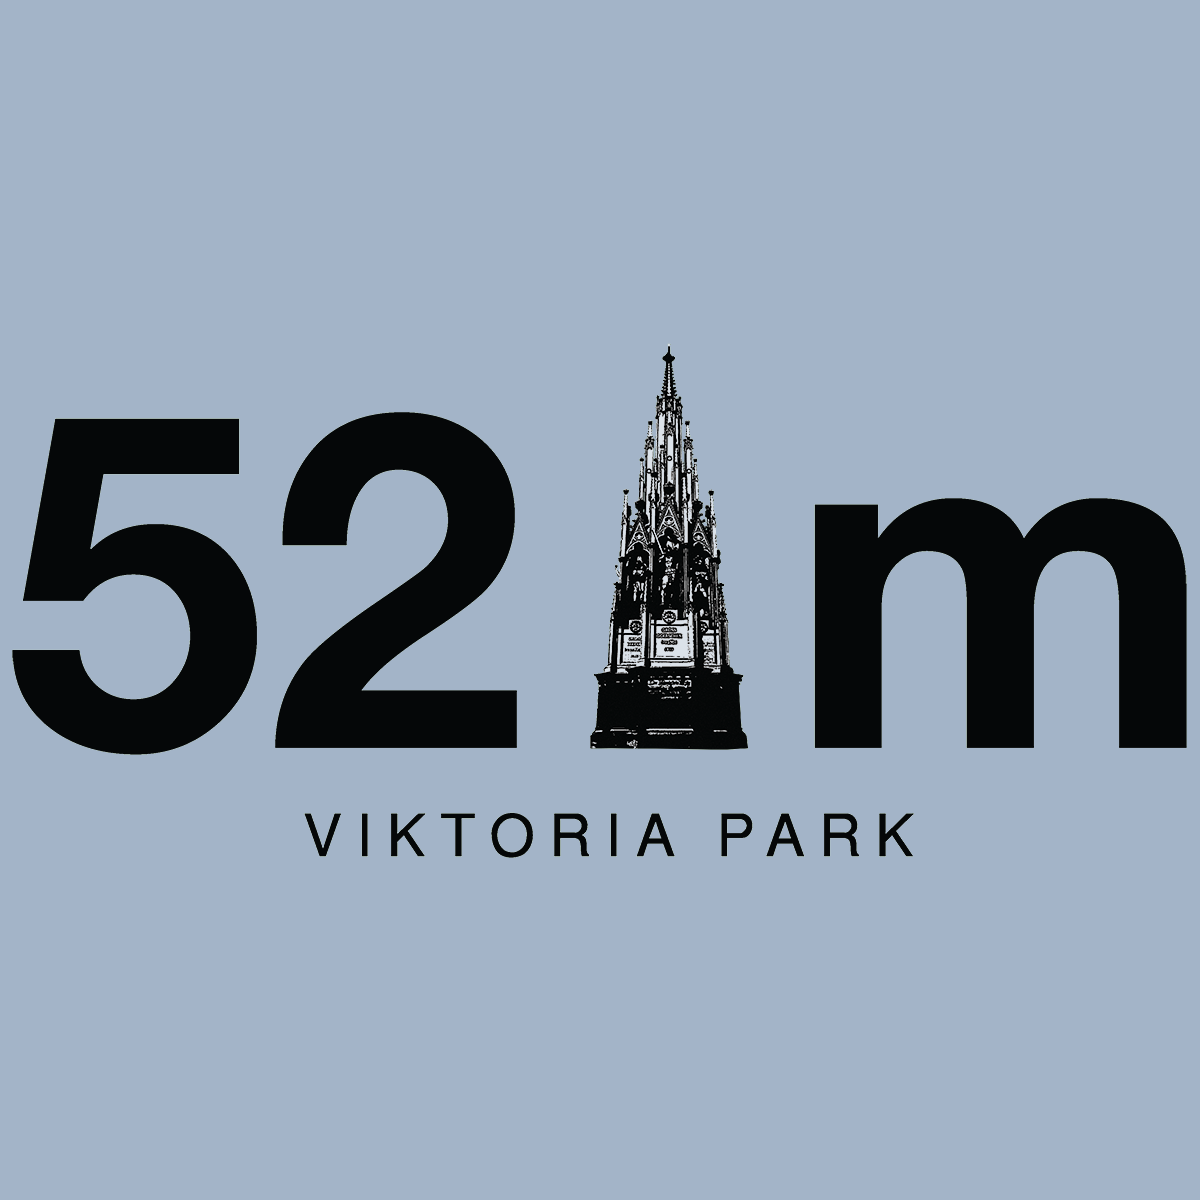 52 m Viktoria Park